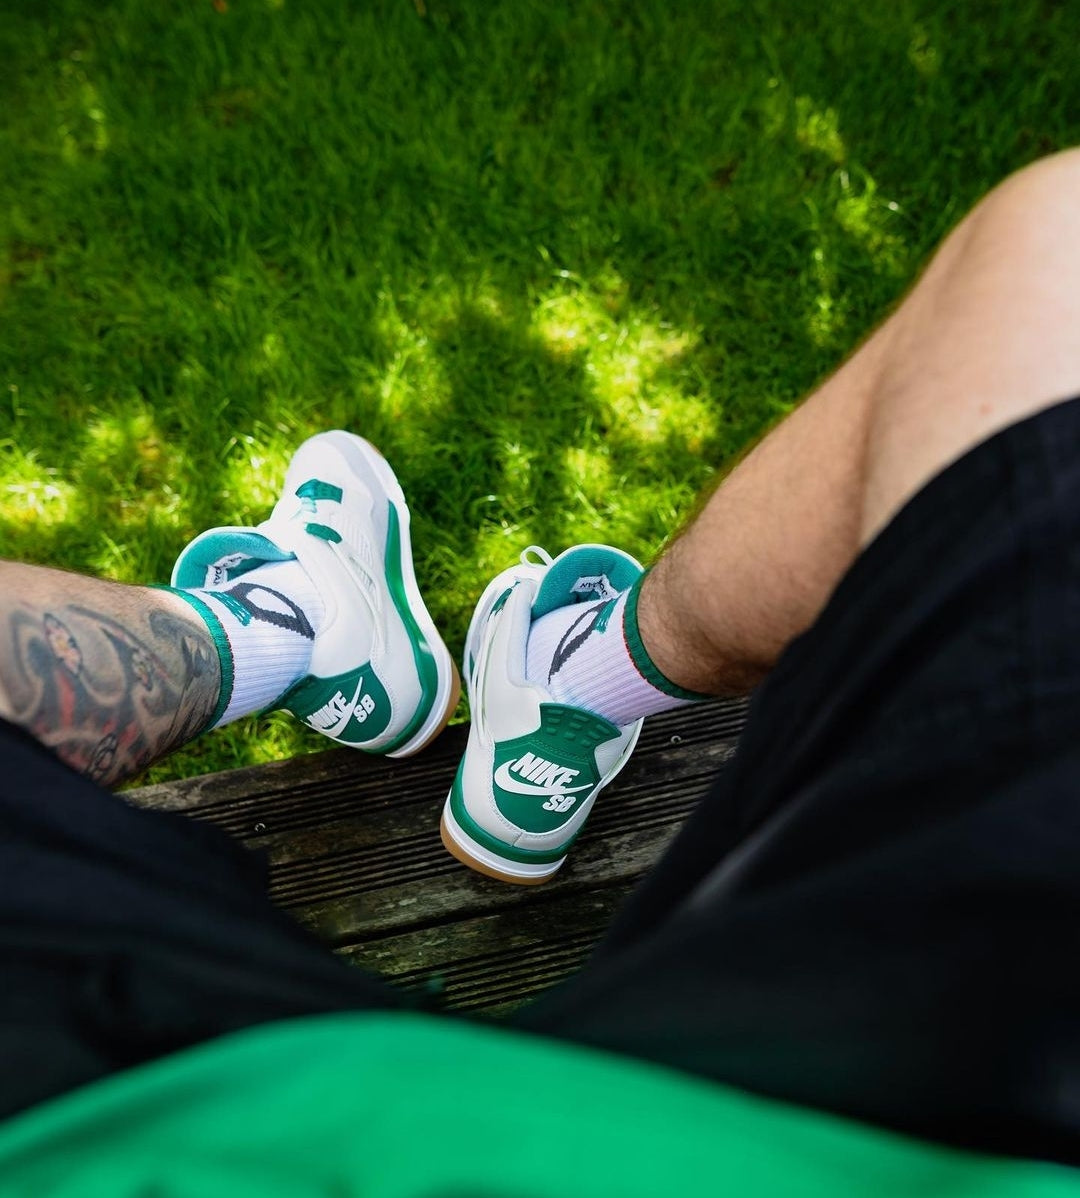 Pine green socks